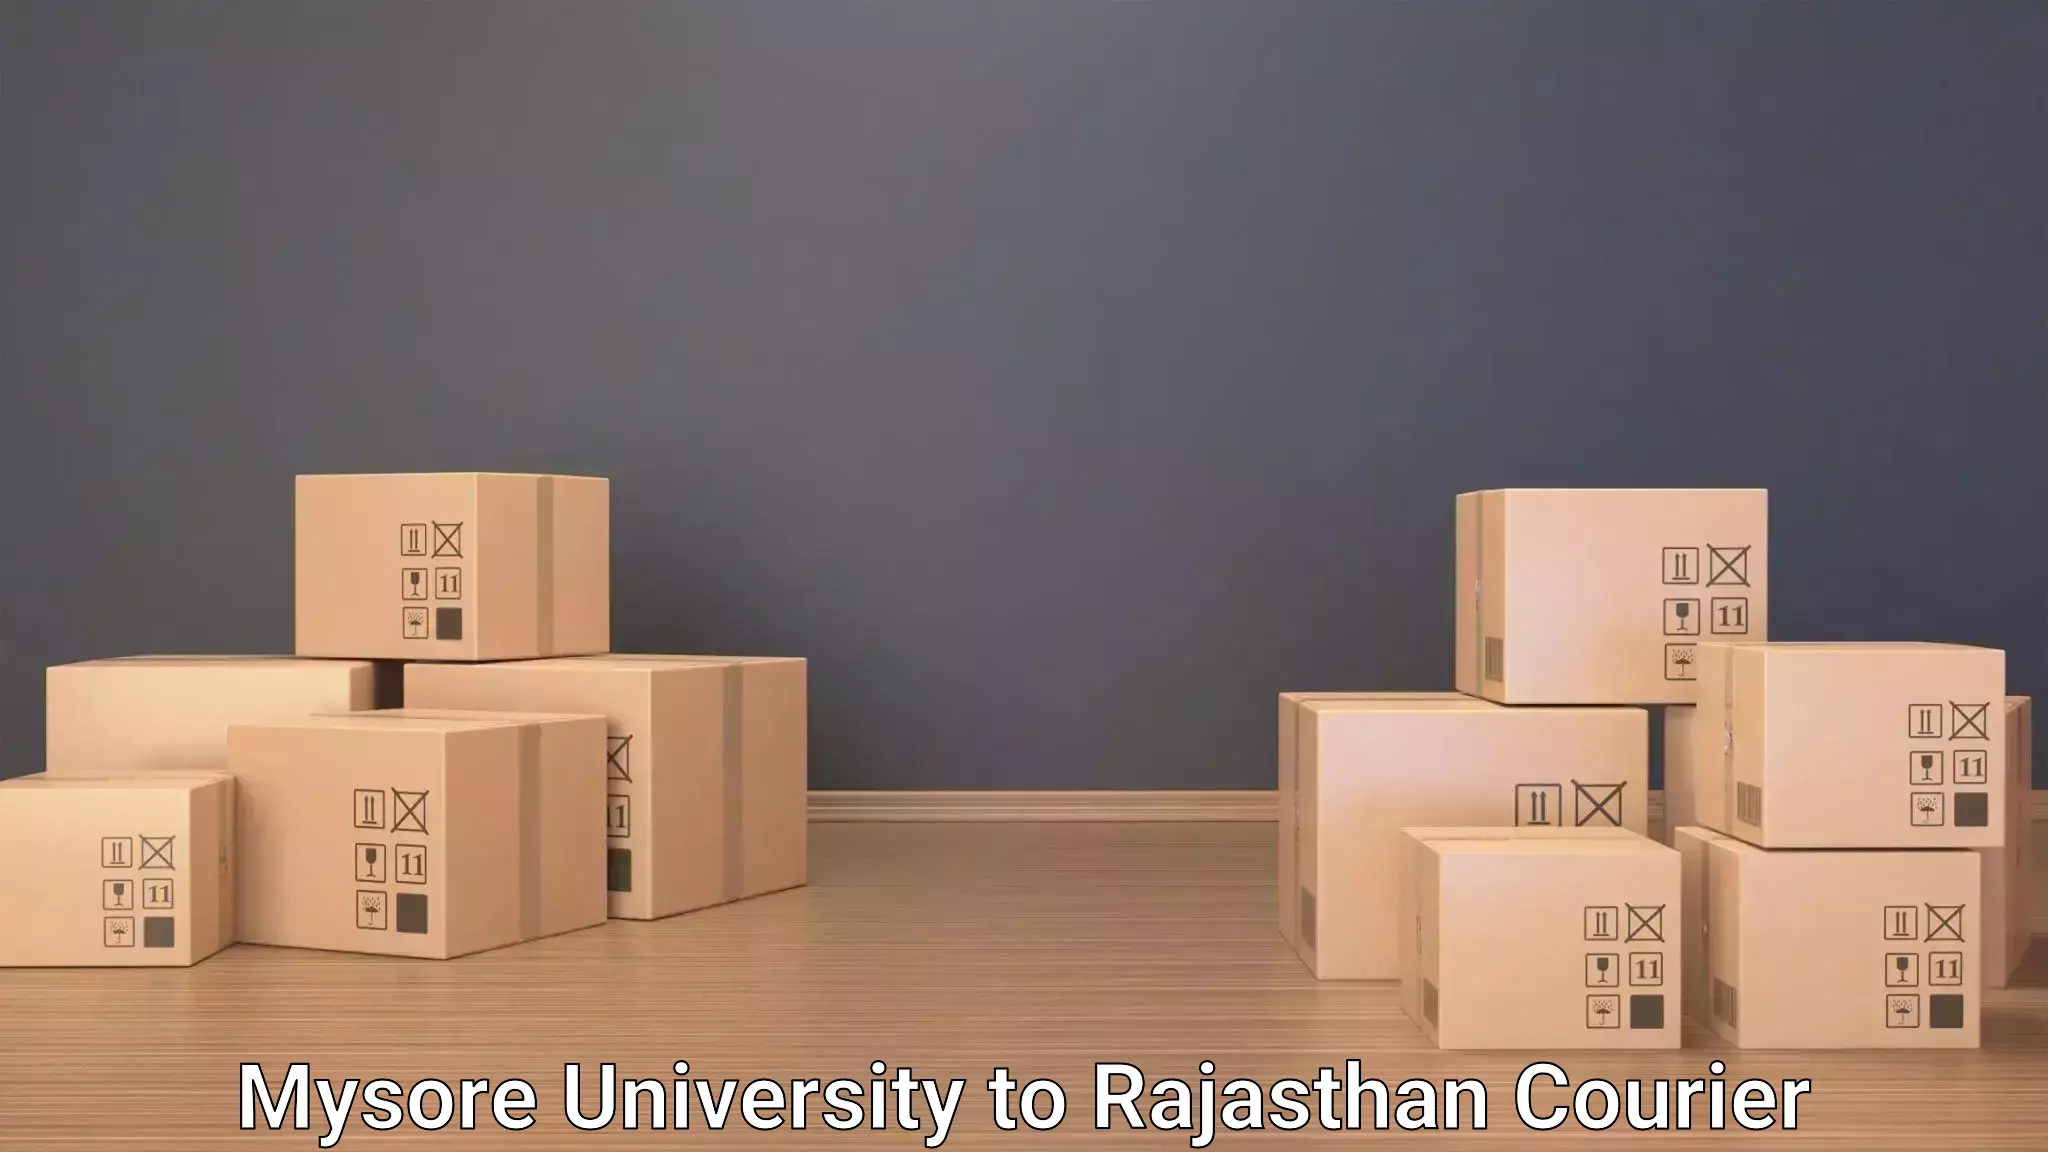 Luggage transport consultancy Mysore University to IIT Jodhpur